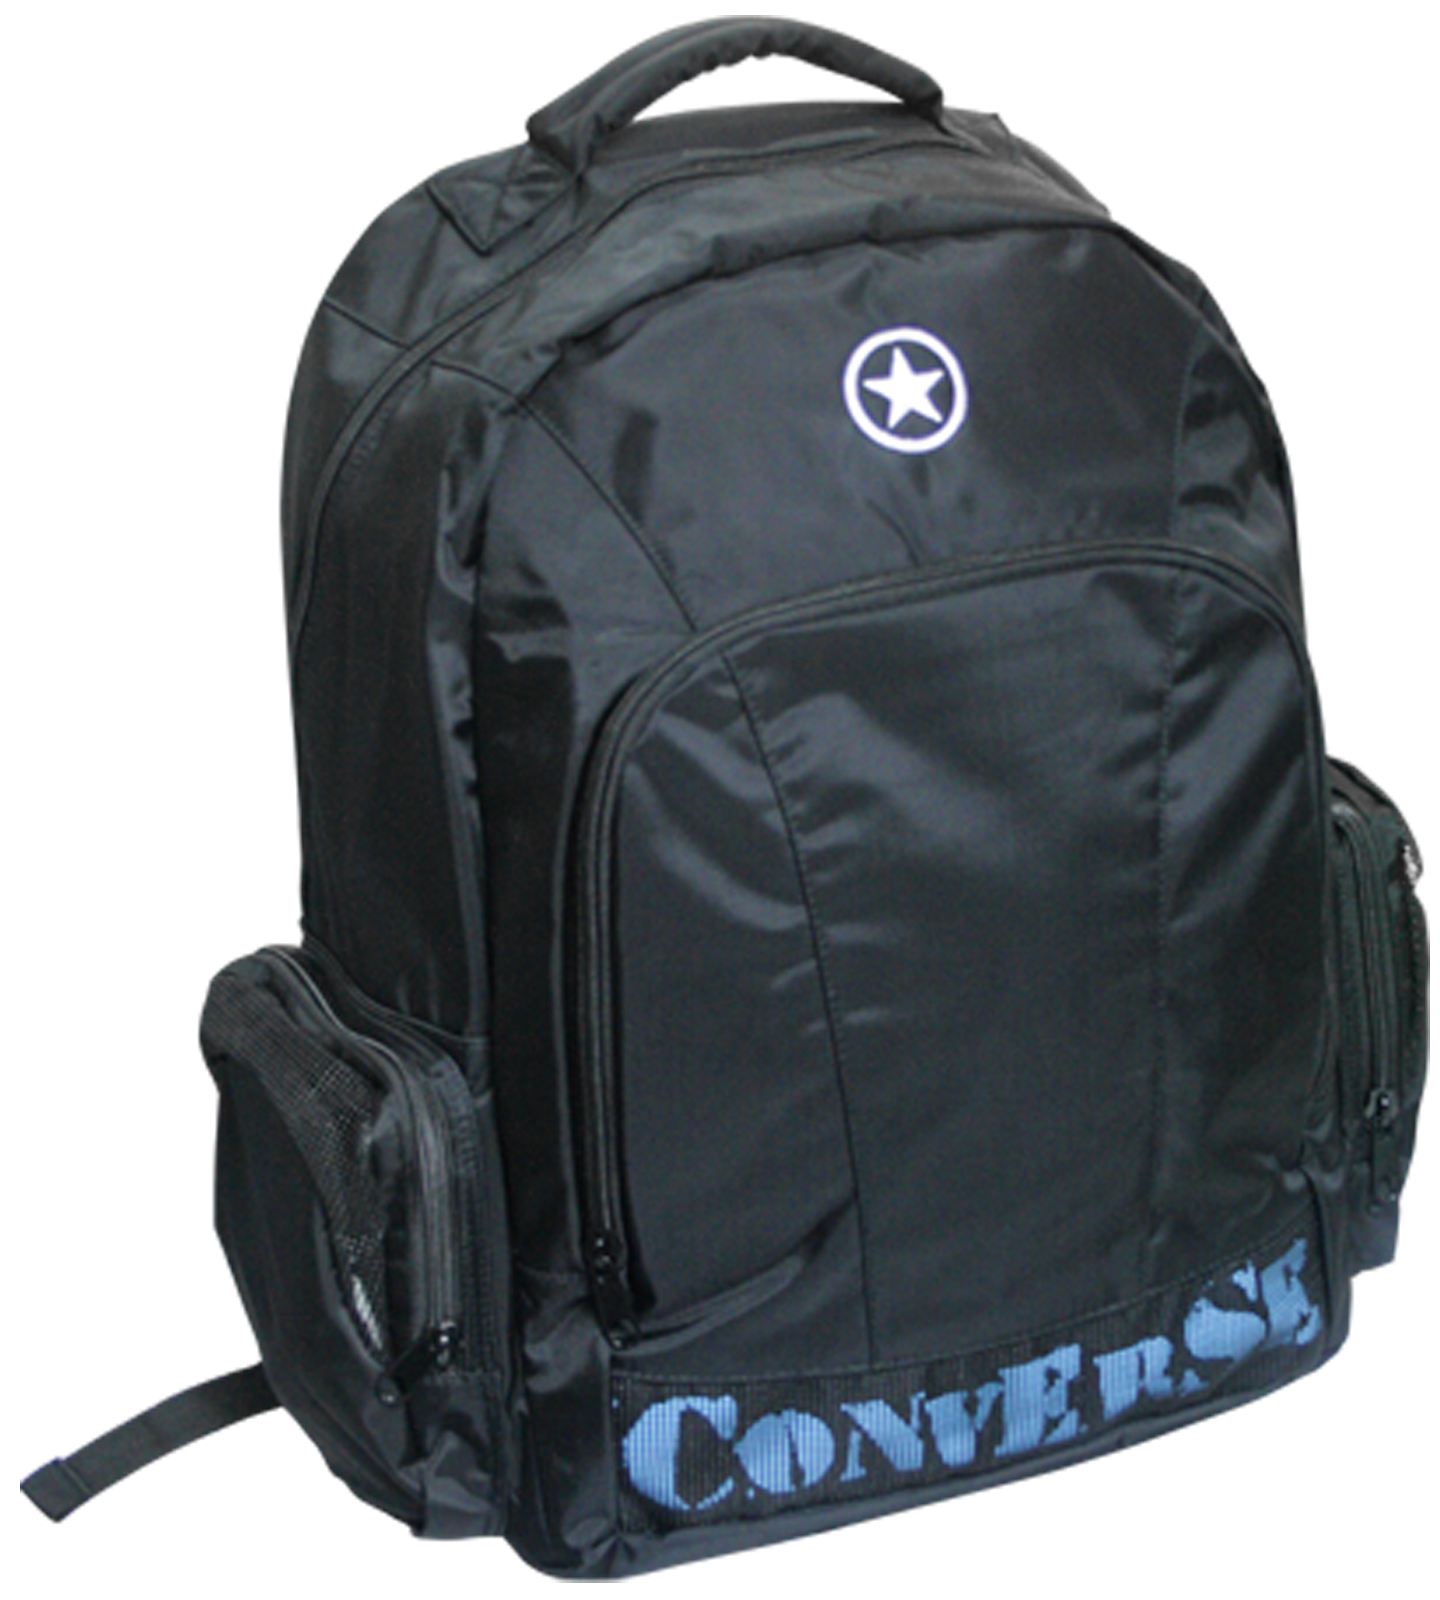 Converse Black Backpack